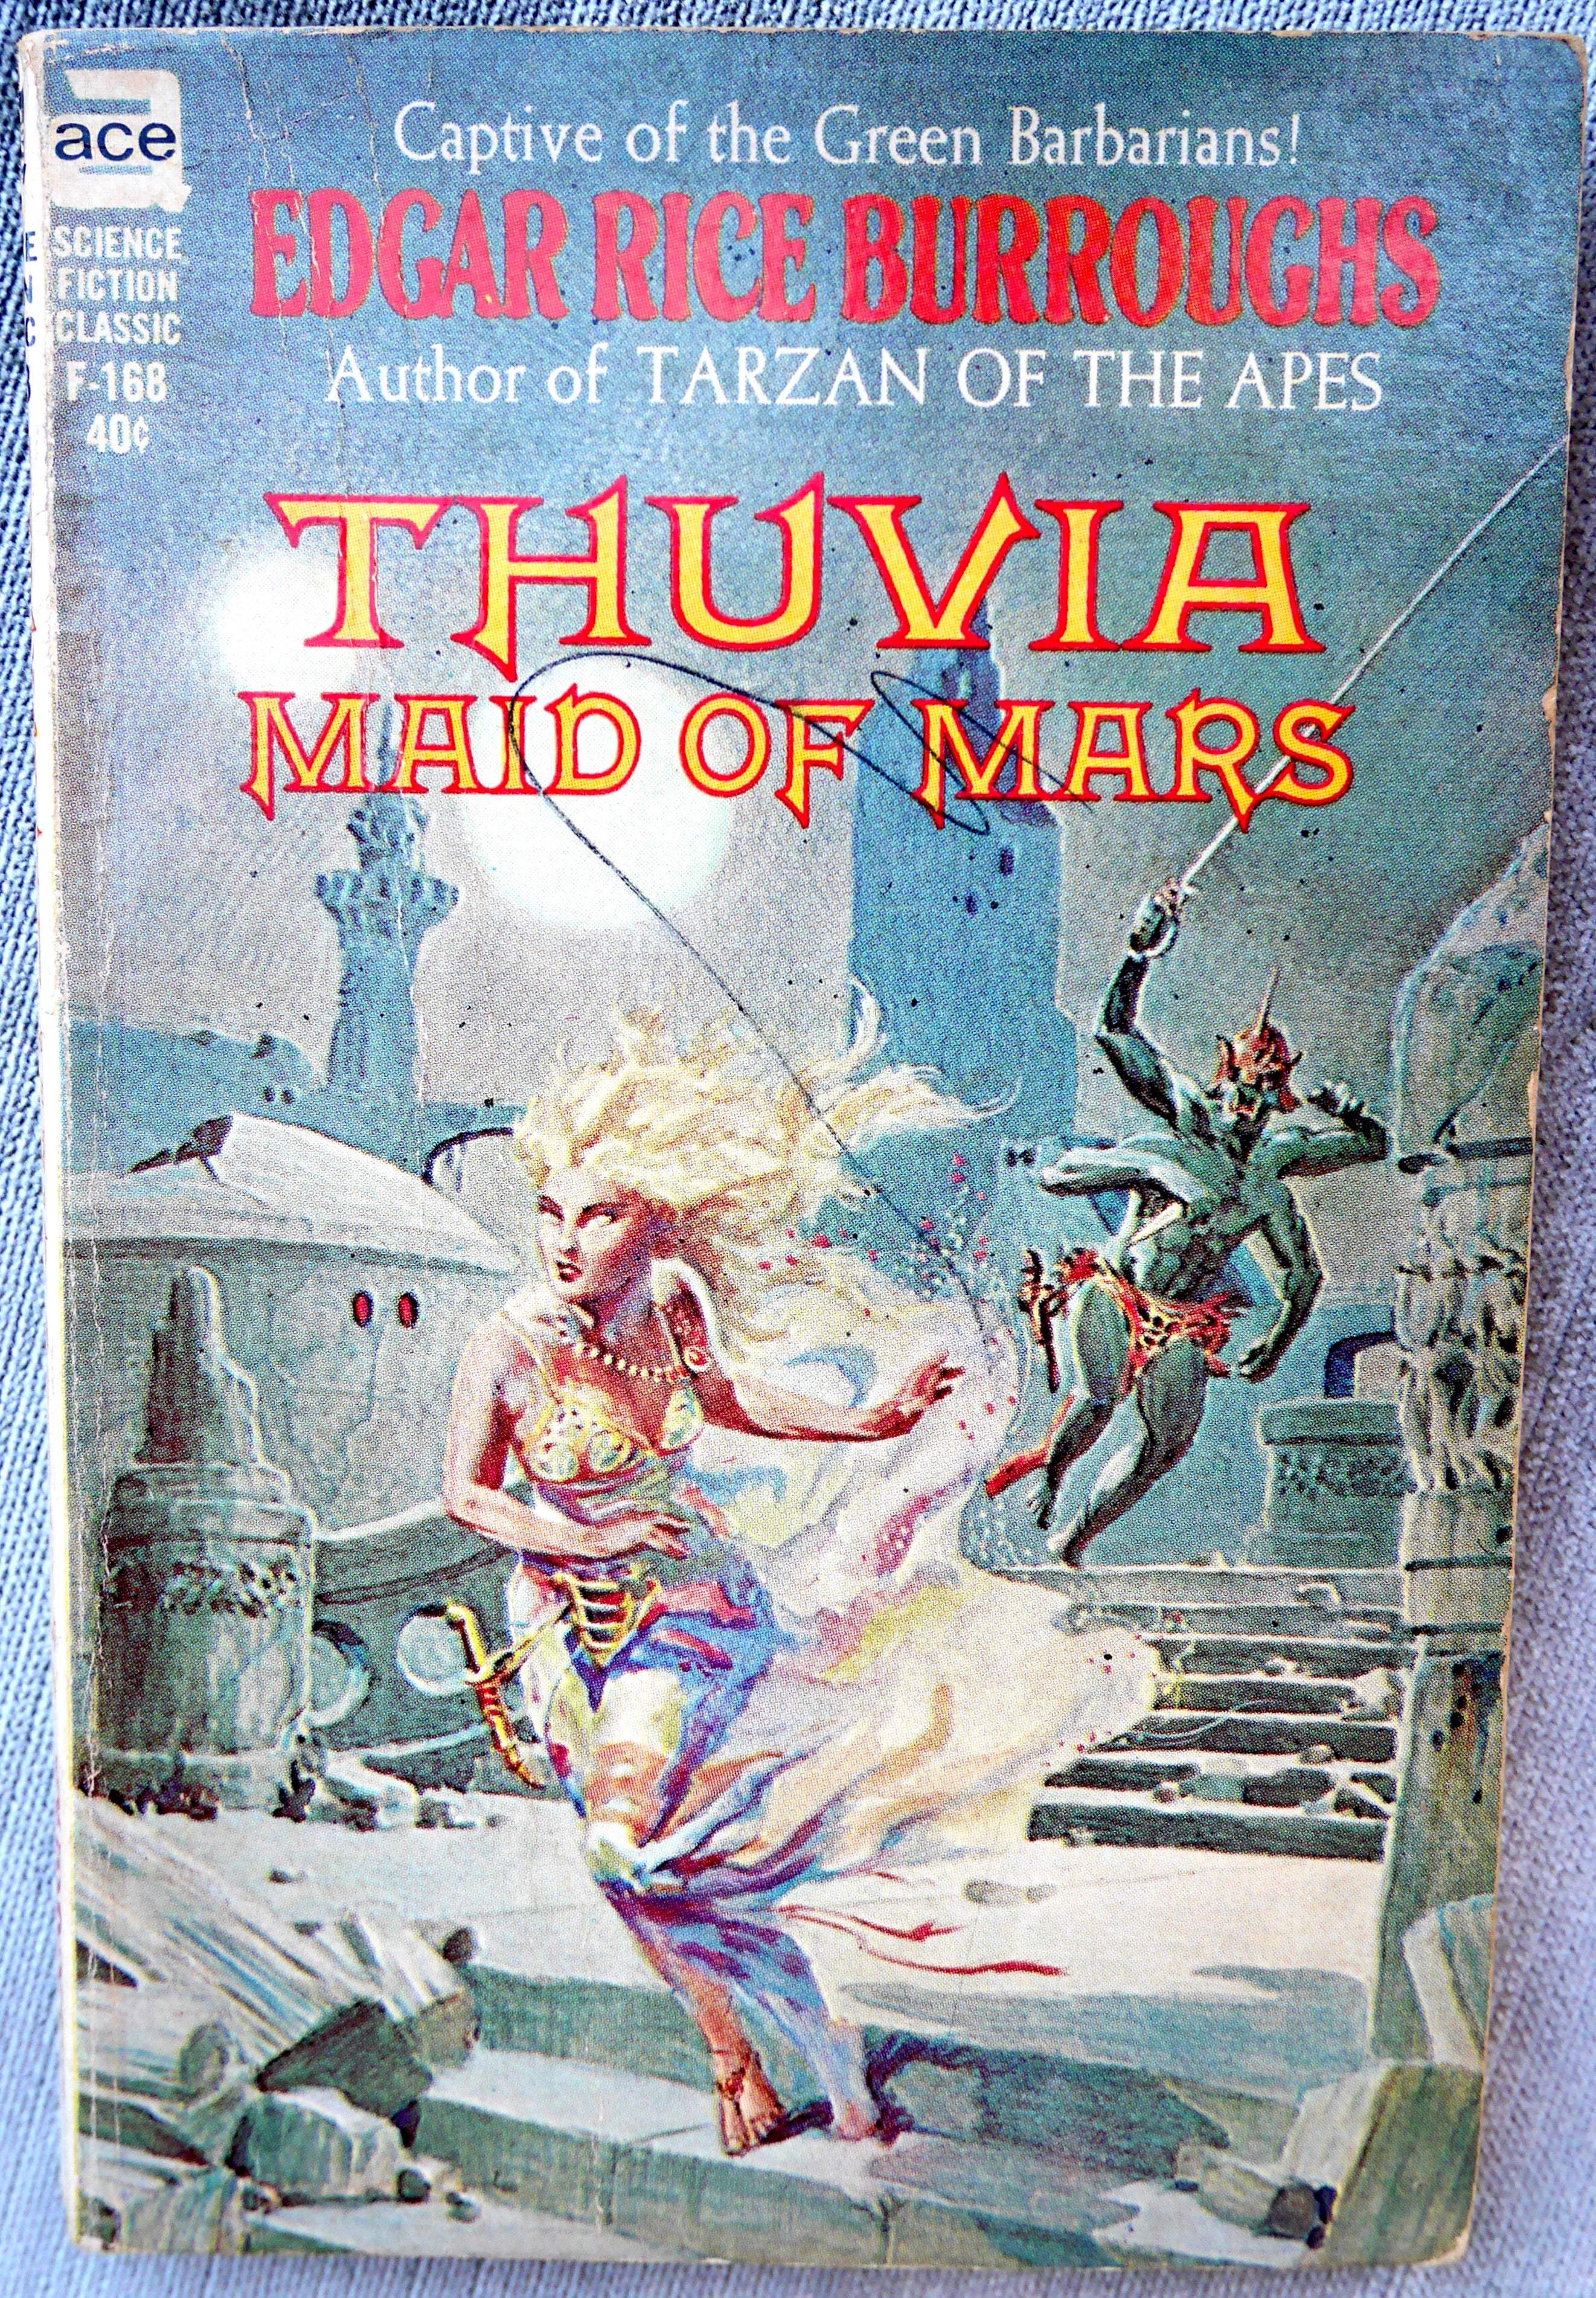 Edgar Rice Burroughs, Thuvia Maid of Mars, Ace, c.1962